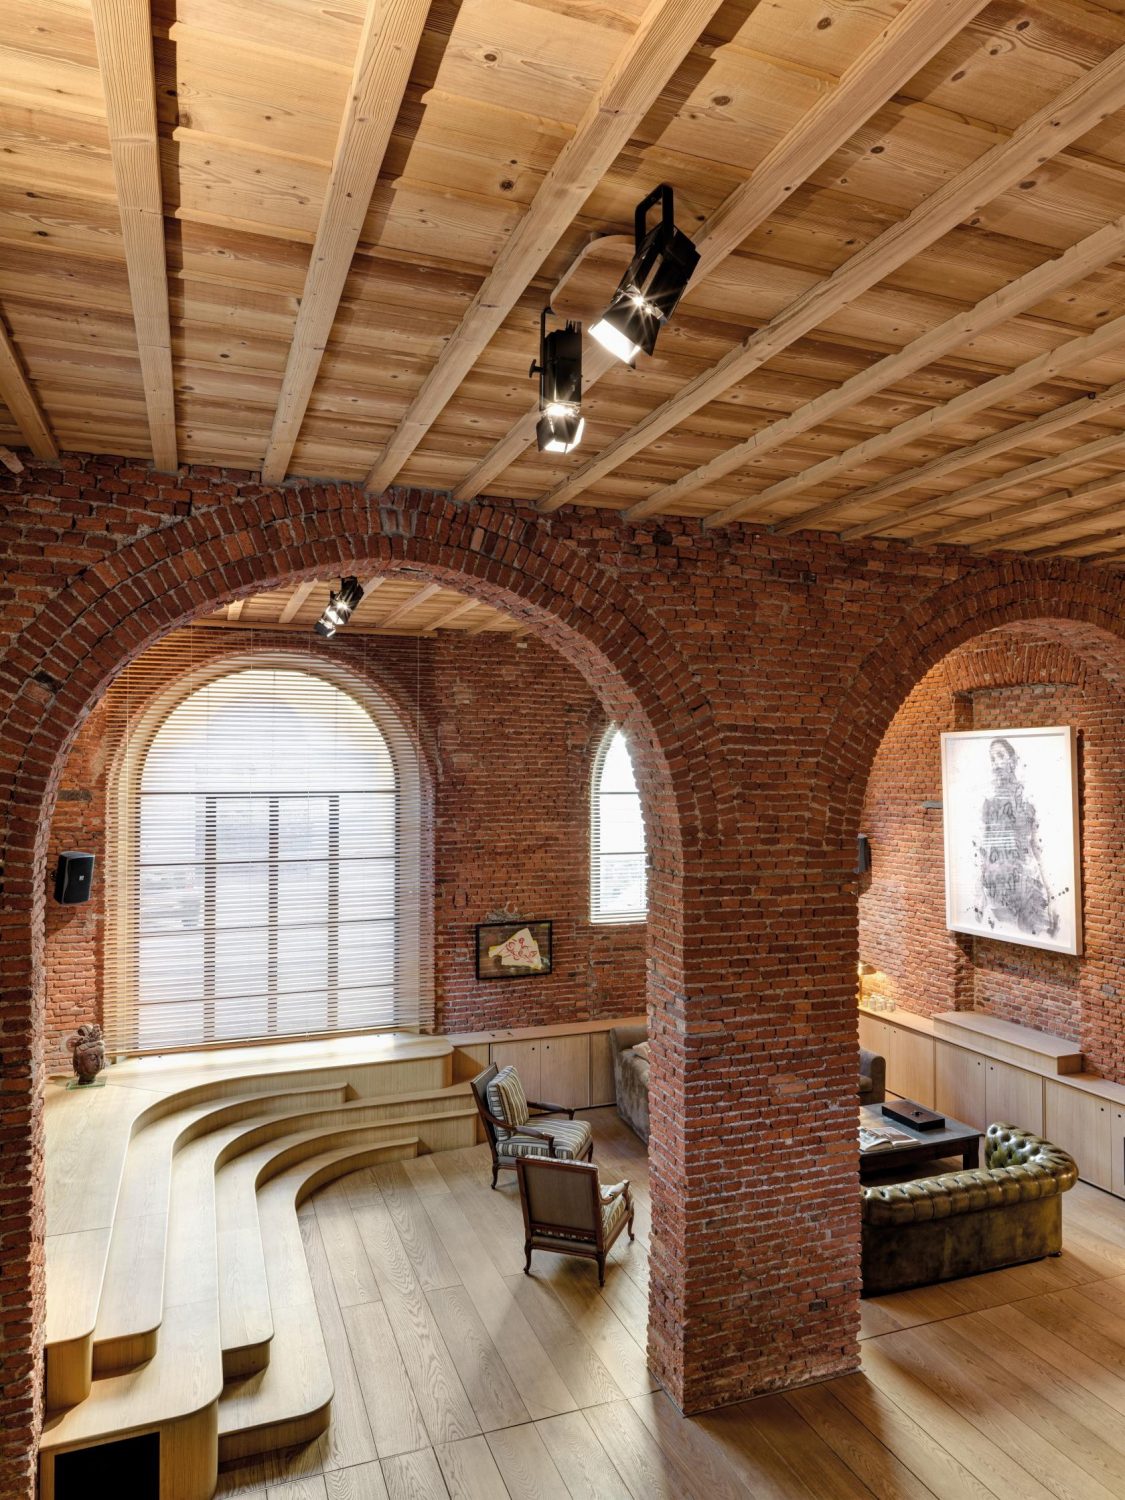 19th-Century Garage turned into Chic Loft